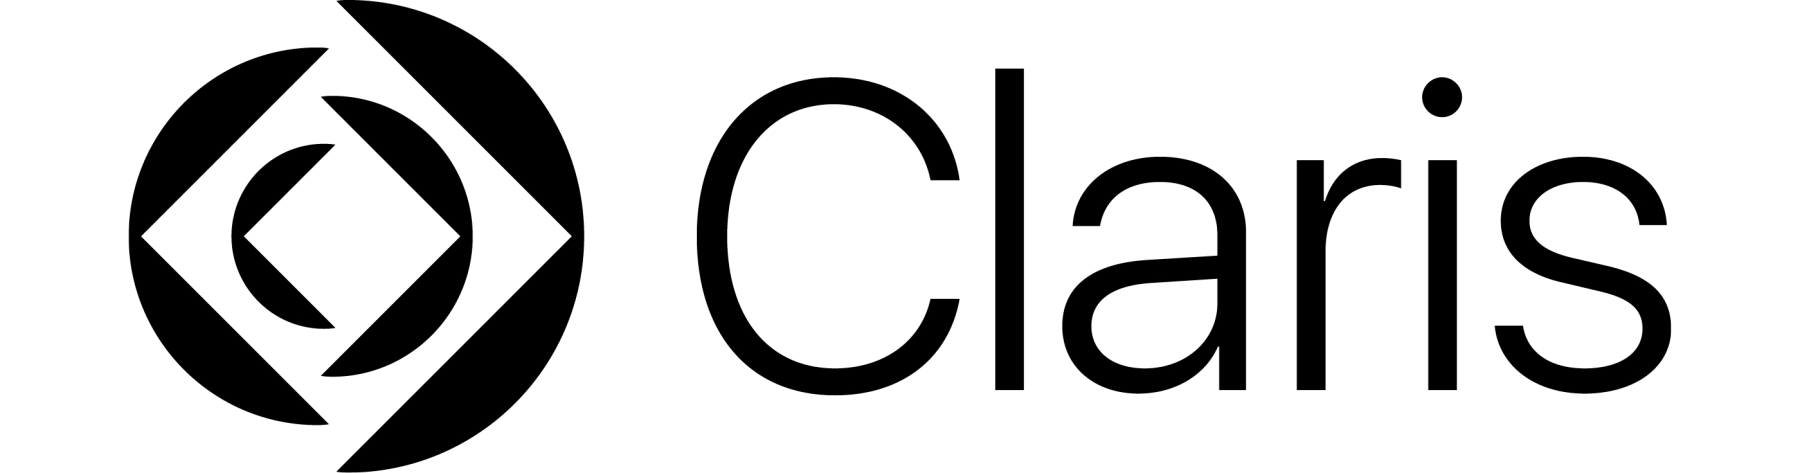 Claris Filemaker Pro 2023 Education; Software Download